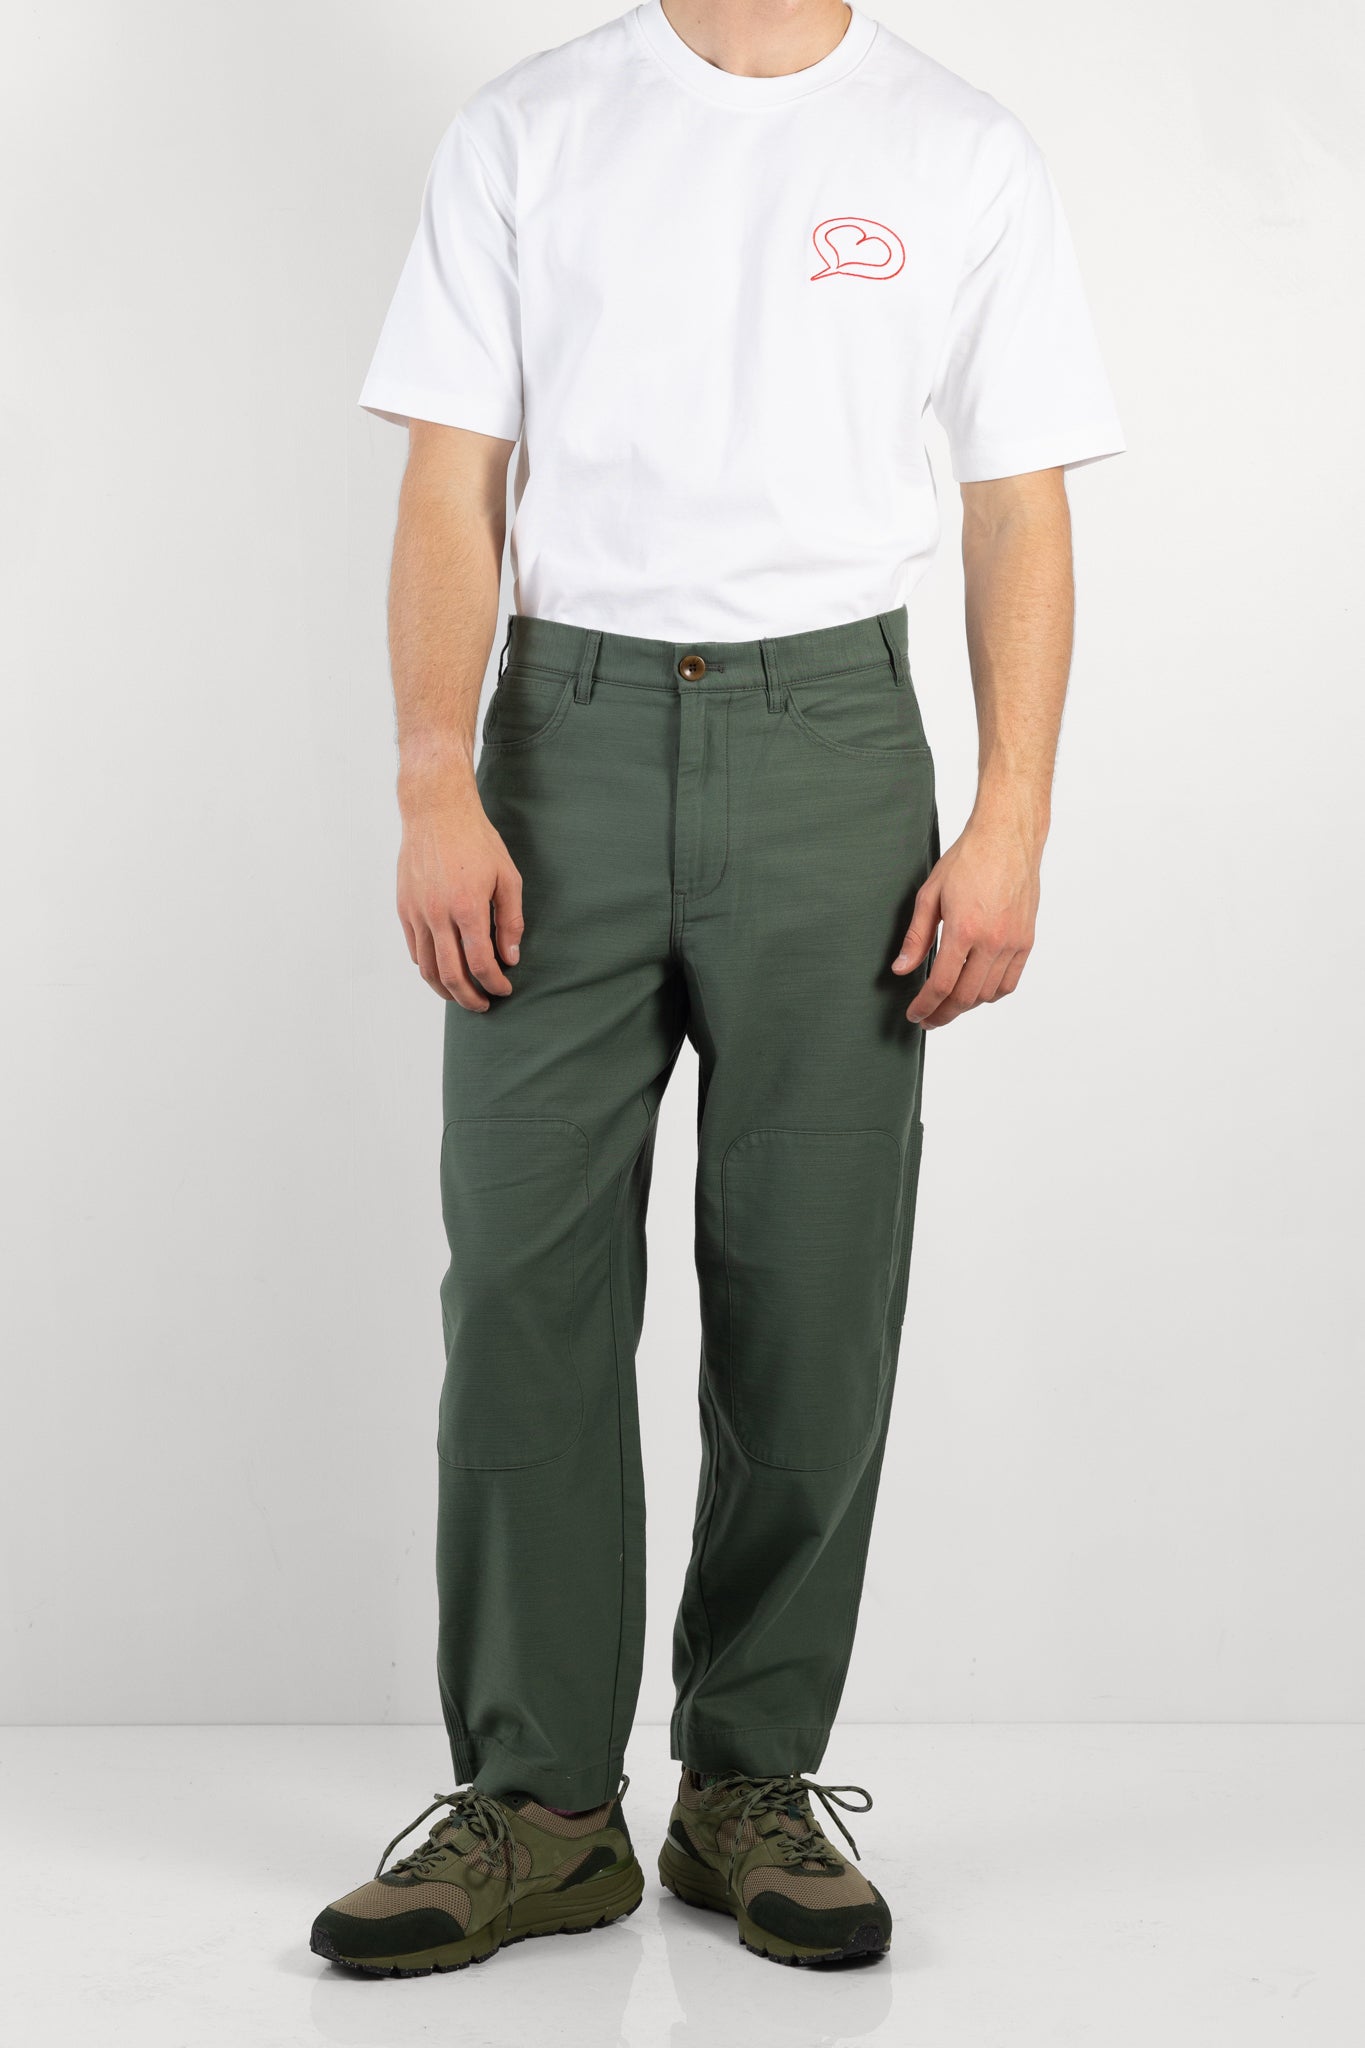 Mens trouser | Garbstore staple pant | The Standard Store